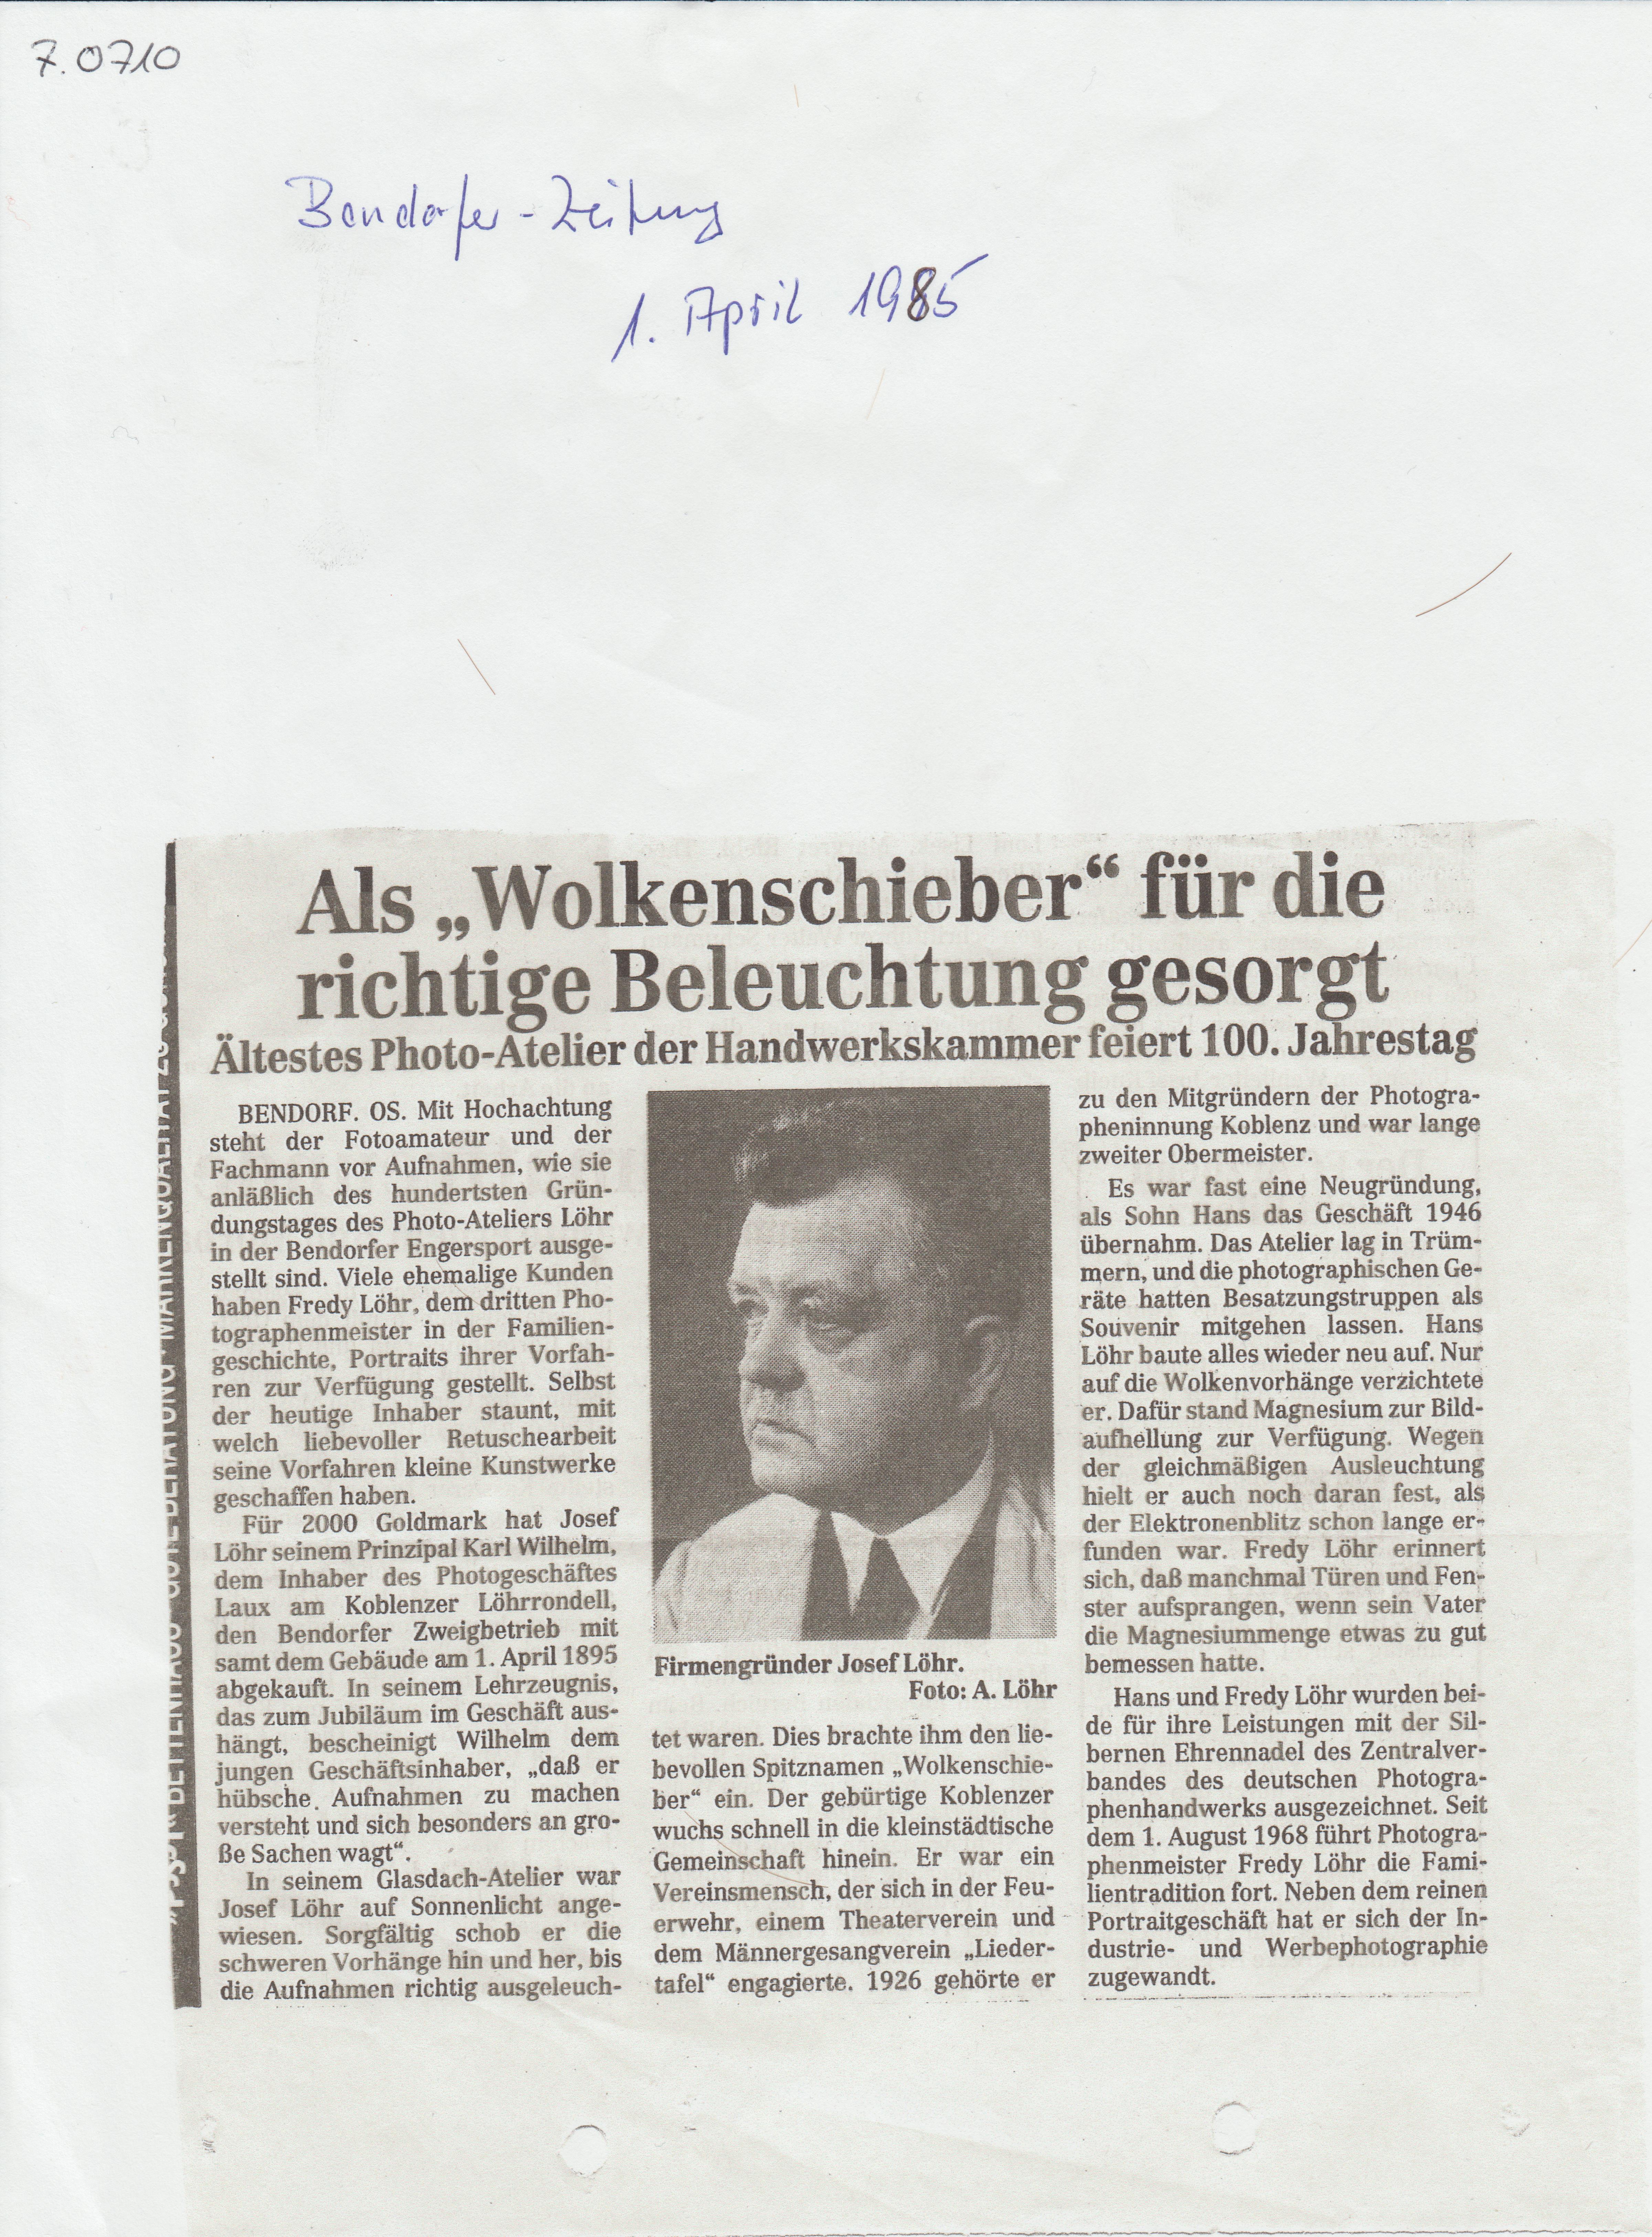 Bendorfer Zeitung vom 1. April 1985, (REM CC BY-NC-SA)